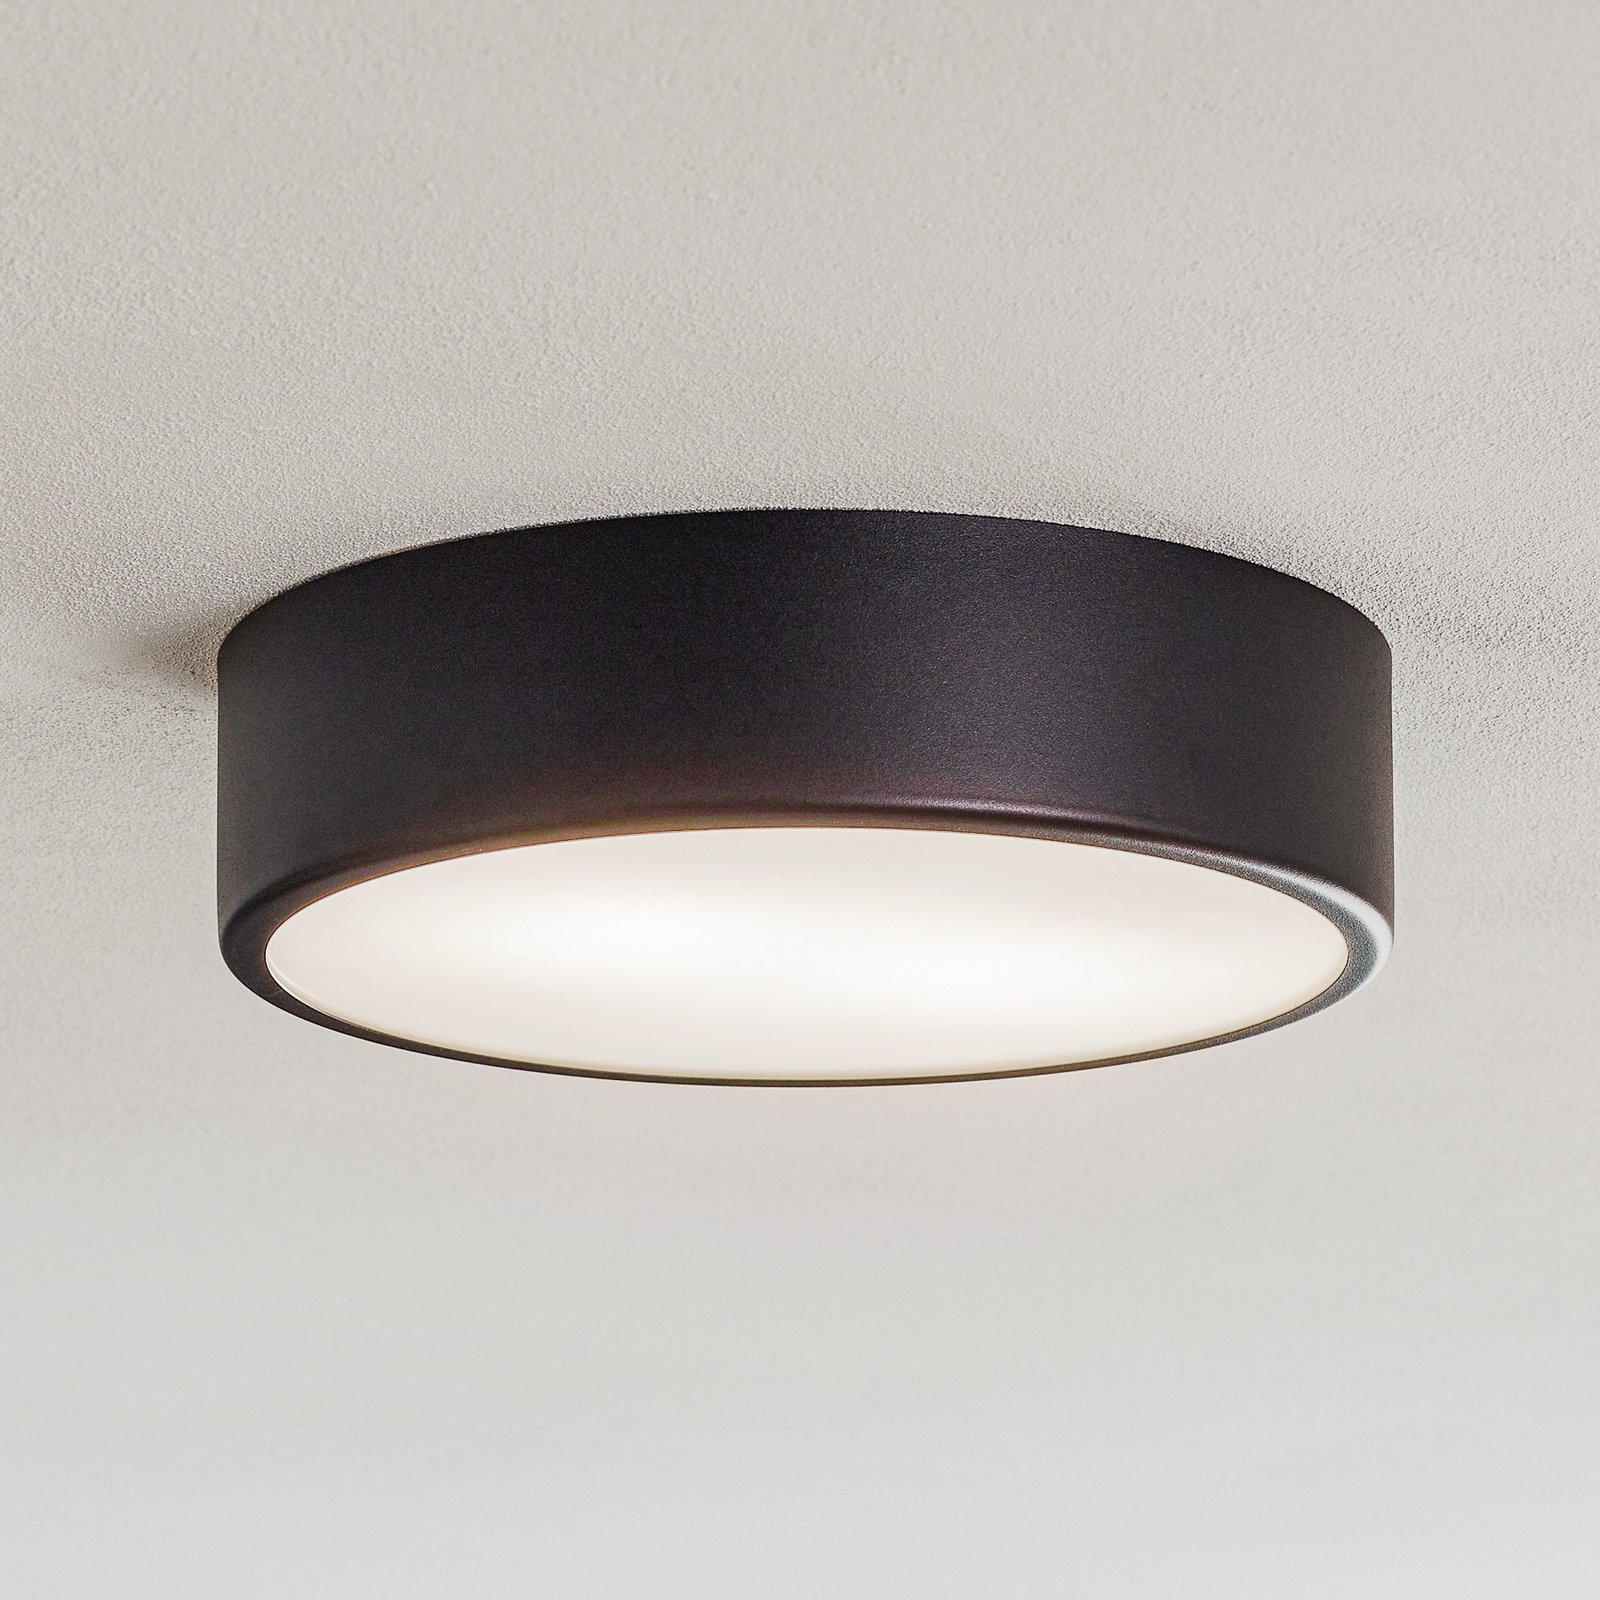 Cleo ceiling light, Ø 30 cm, black